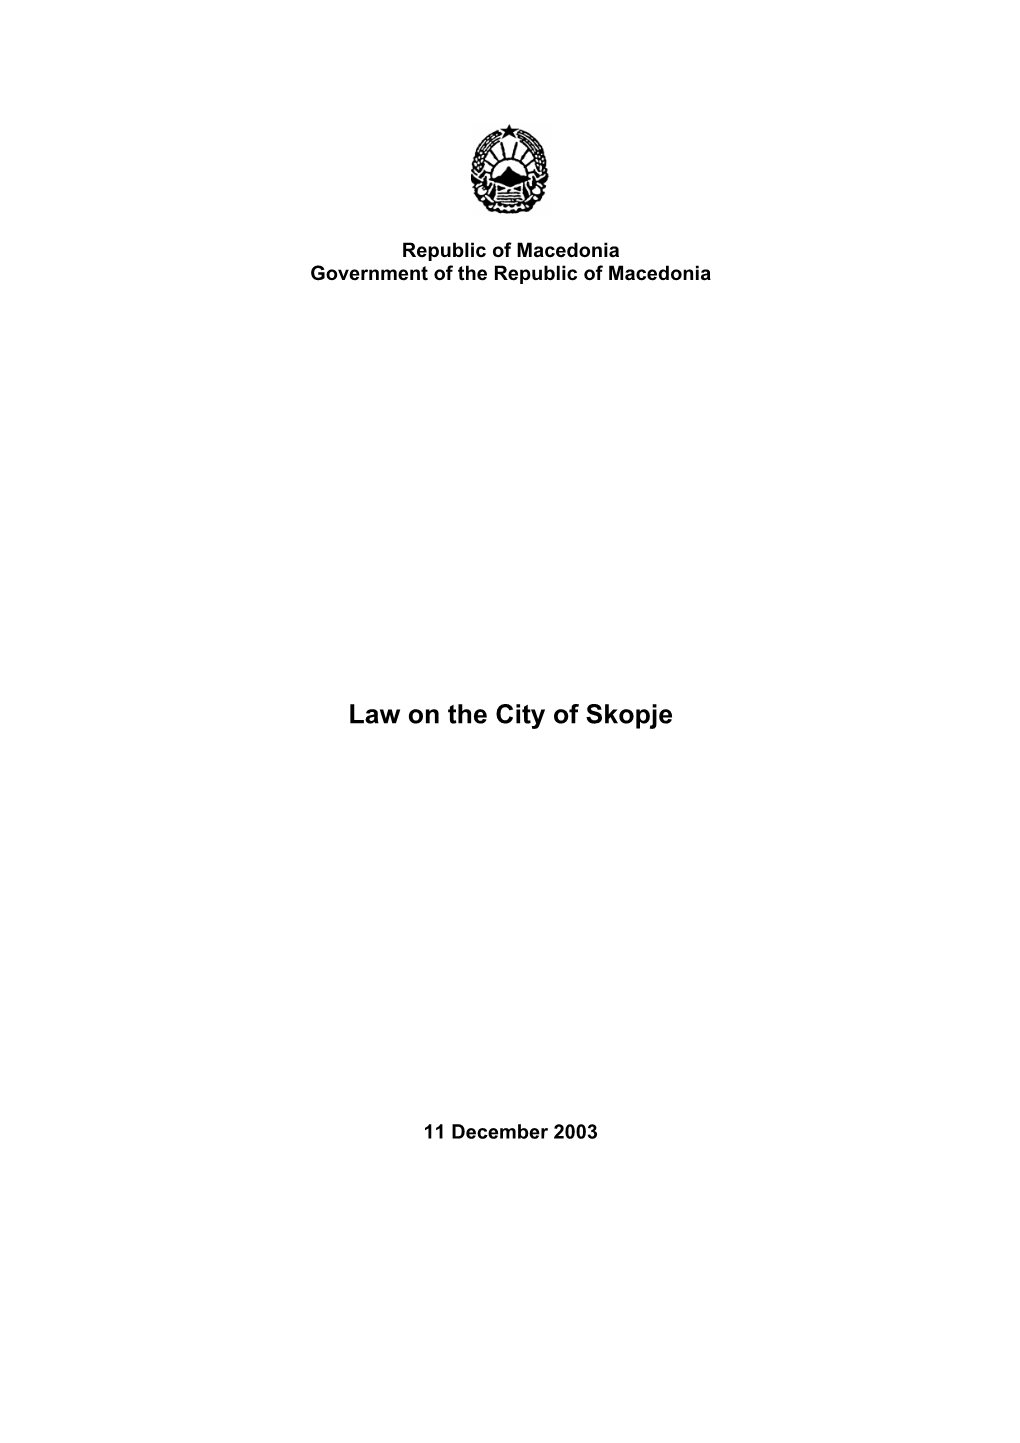 Law on the City of Skopje